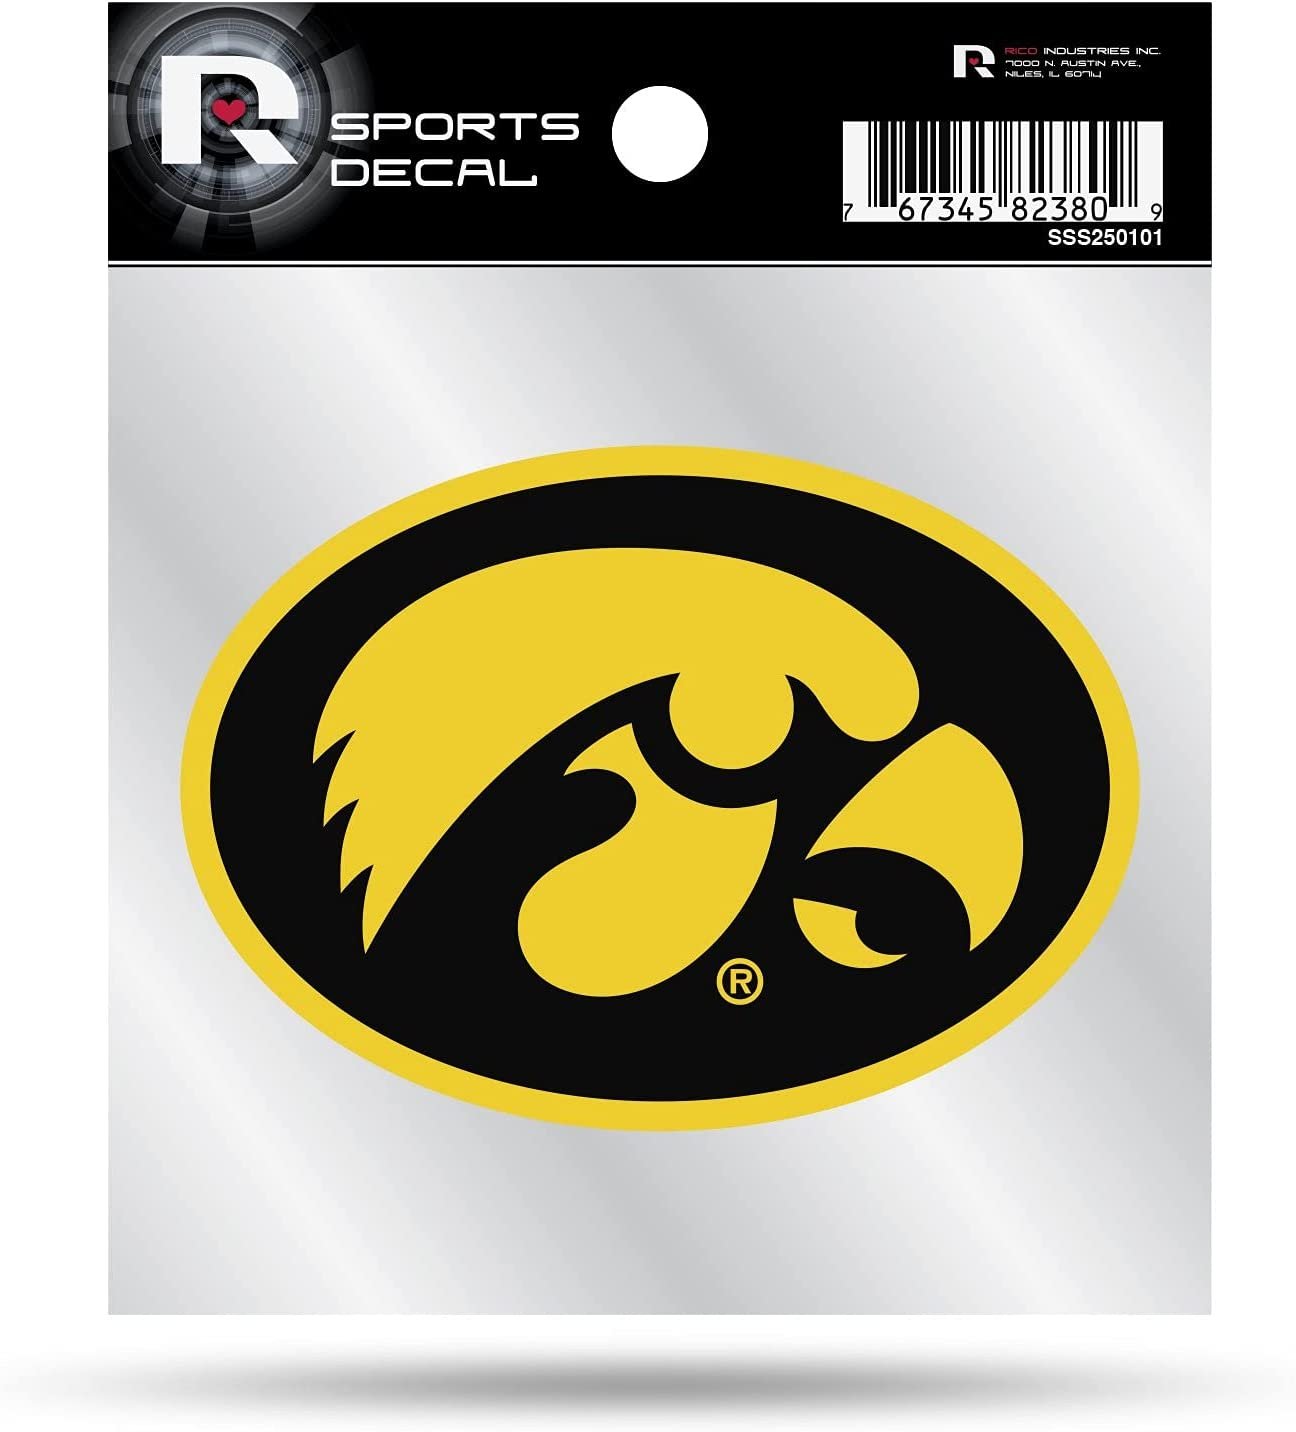 University of Iowa Hawkeyes 4x4 Inch Die Cut Decal Sticker, Primary Logo, Clear Backing